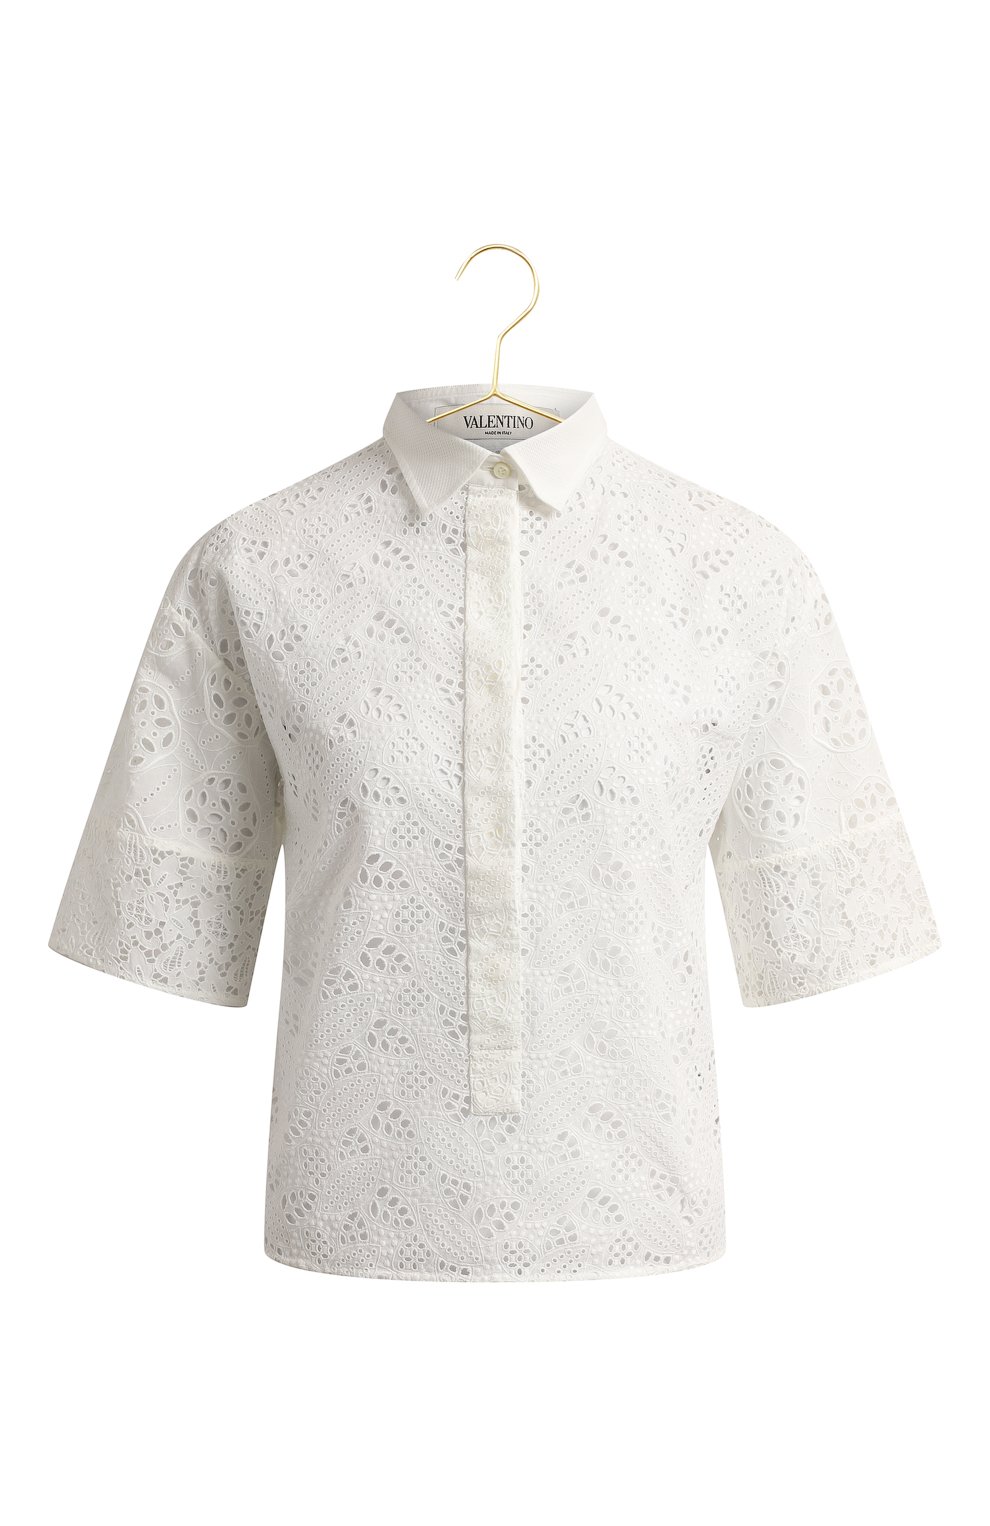 Хлопковая блуза | Valentino | Белый - 1